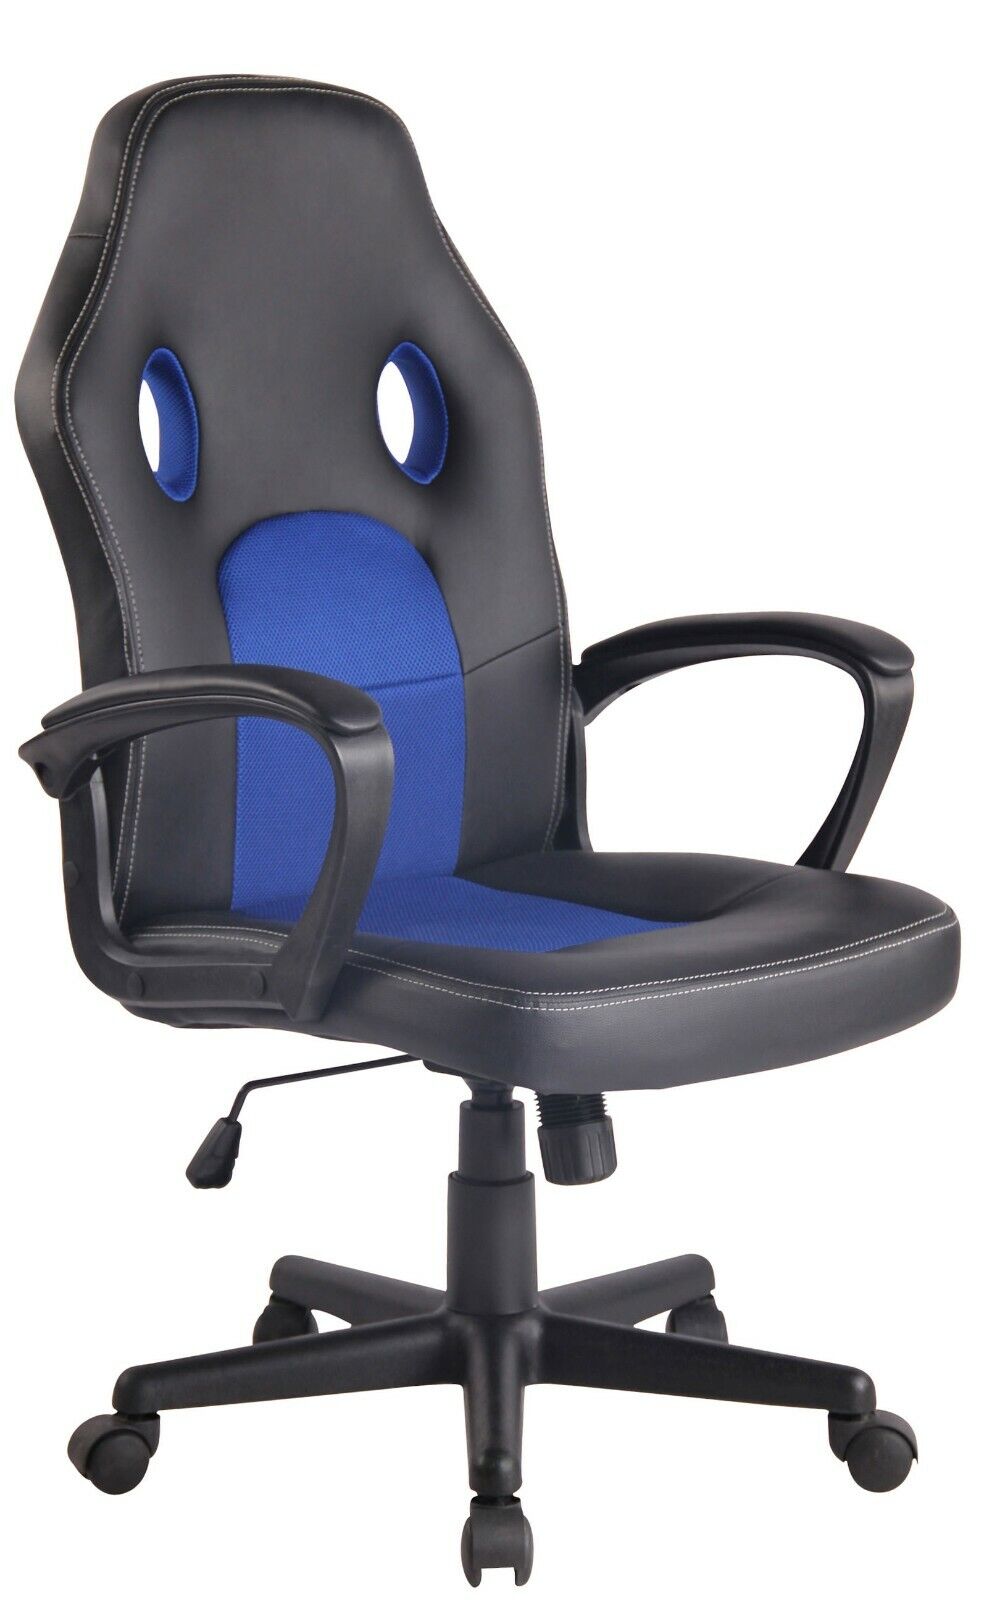 Bürostuhl 120kg belastbar schwarz blau Chefsessel Drehstuhl günstig preiswert 